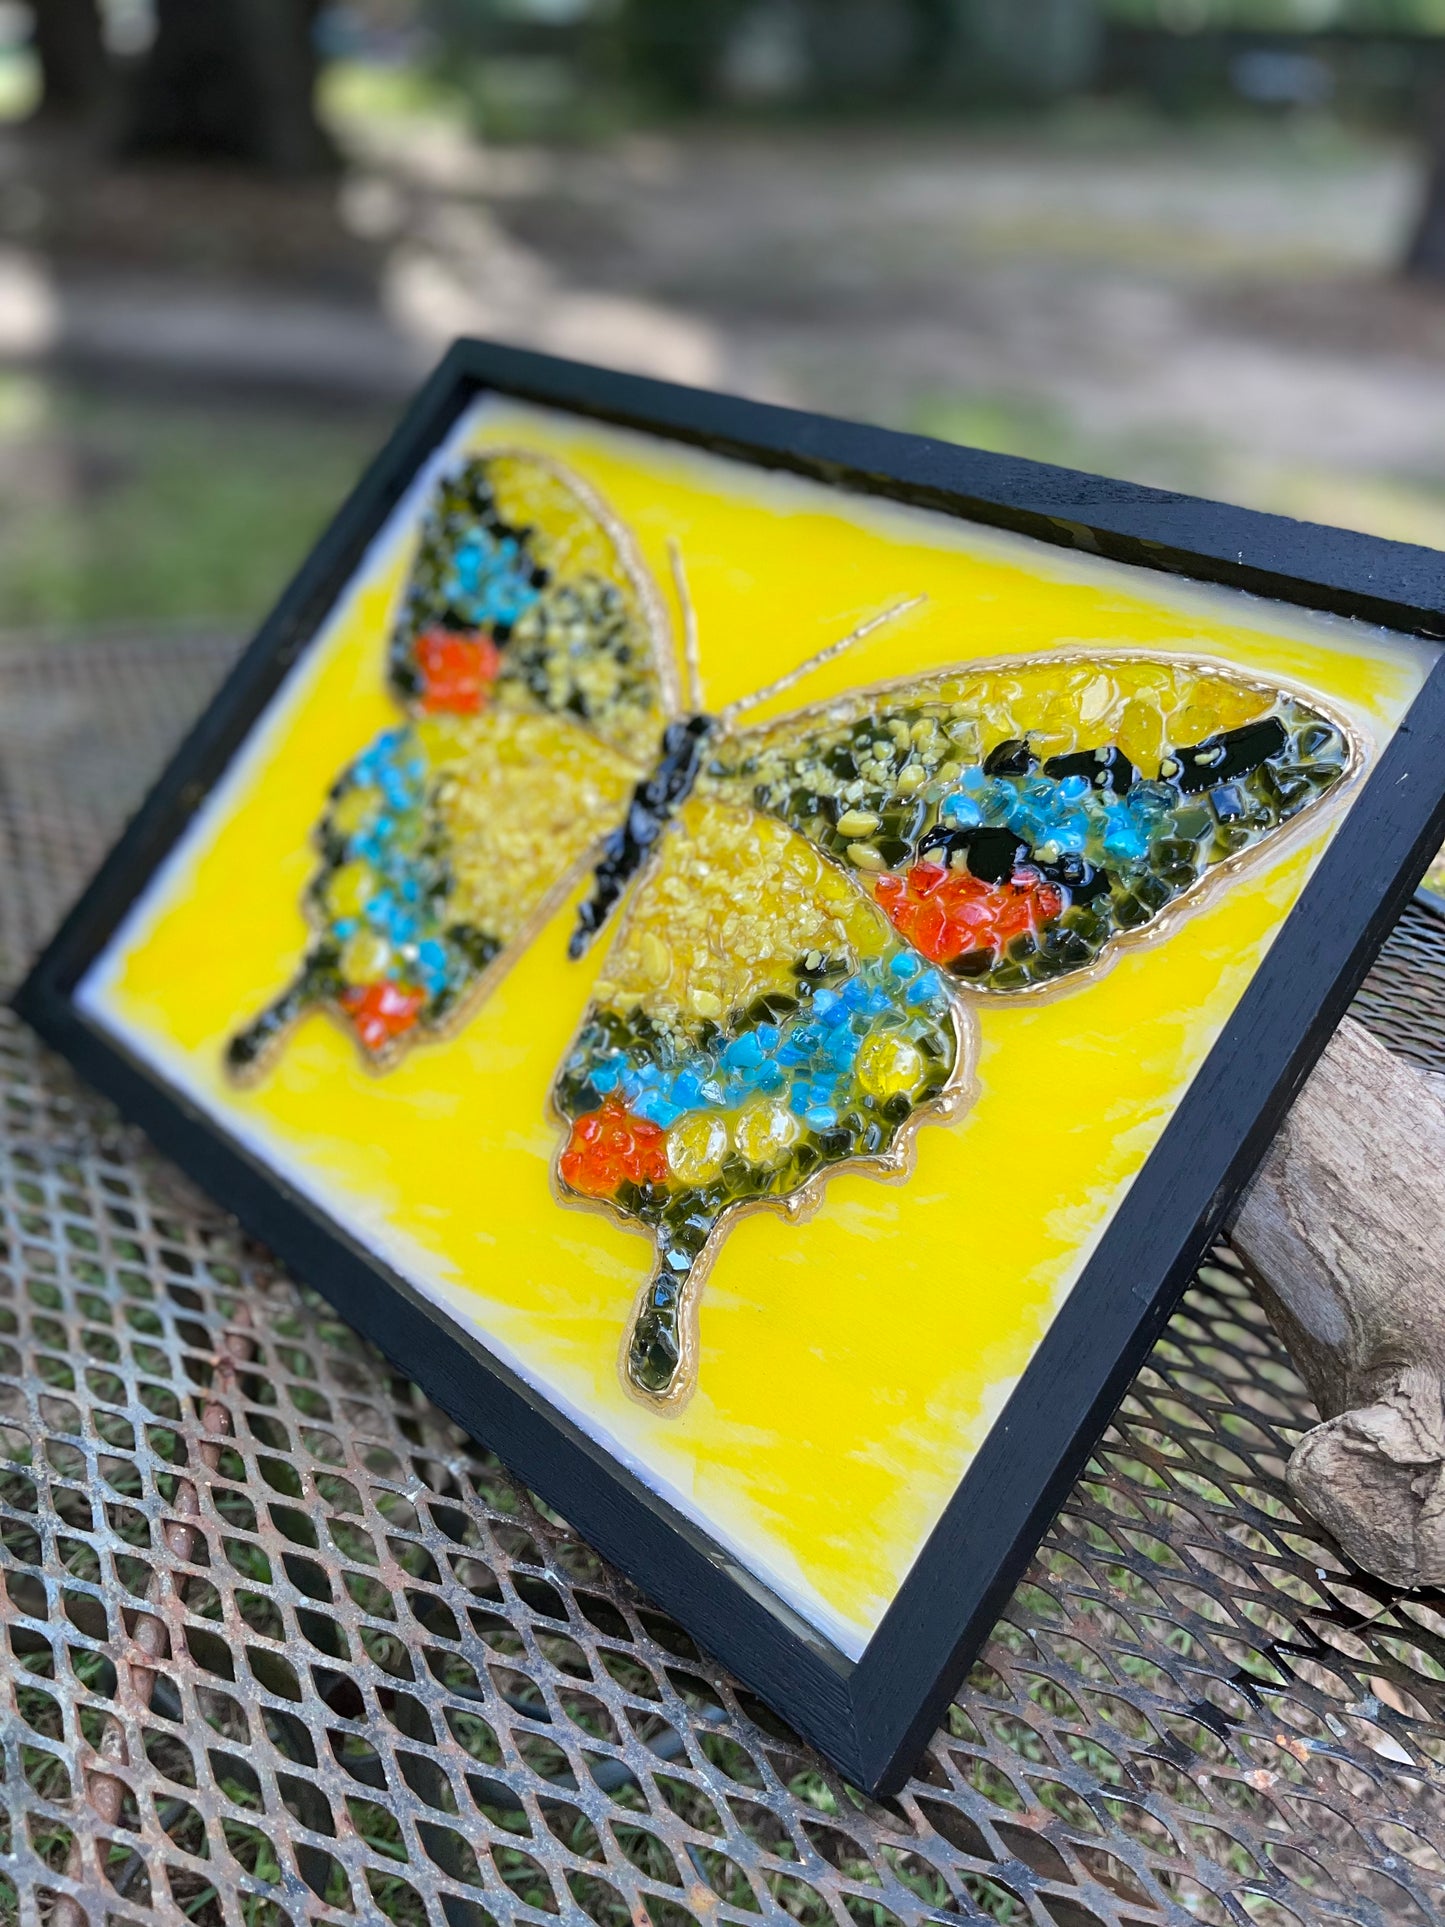 Black & Yellow Swallowtail Butterfly